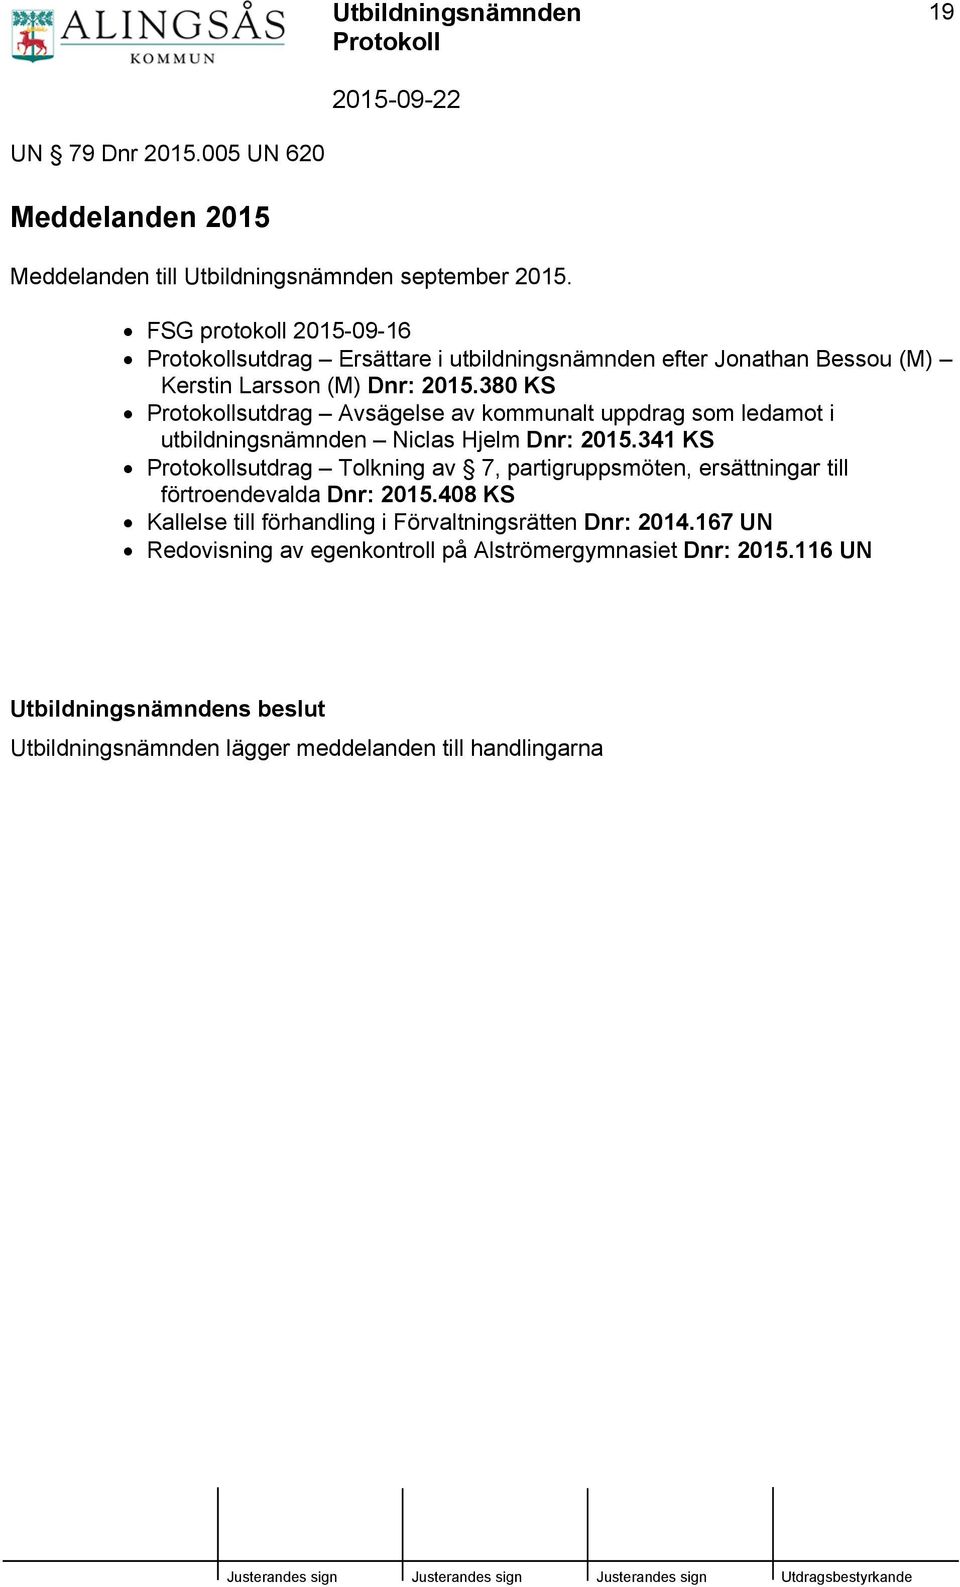 380 KS sutdrag Avsägelse av kommunalt uppdrag som ledamot i utbildningsnämnden Niclas Hjelm Dnr: 2015.